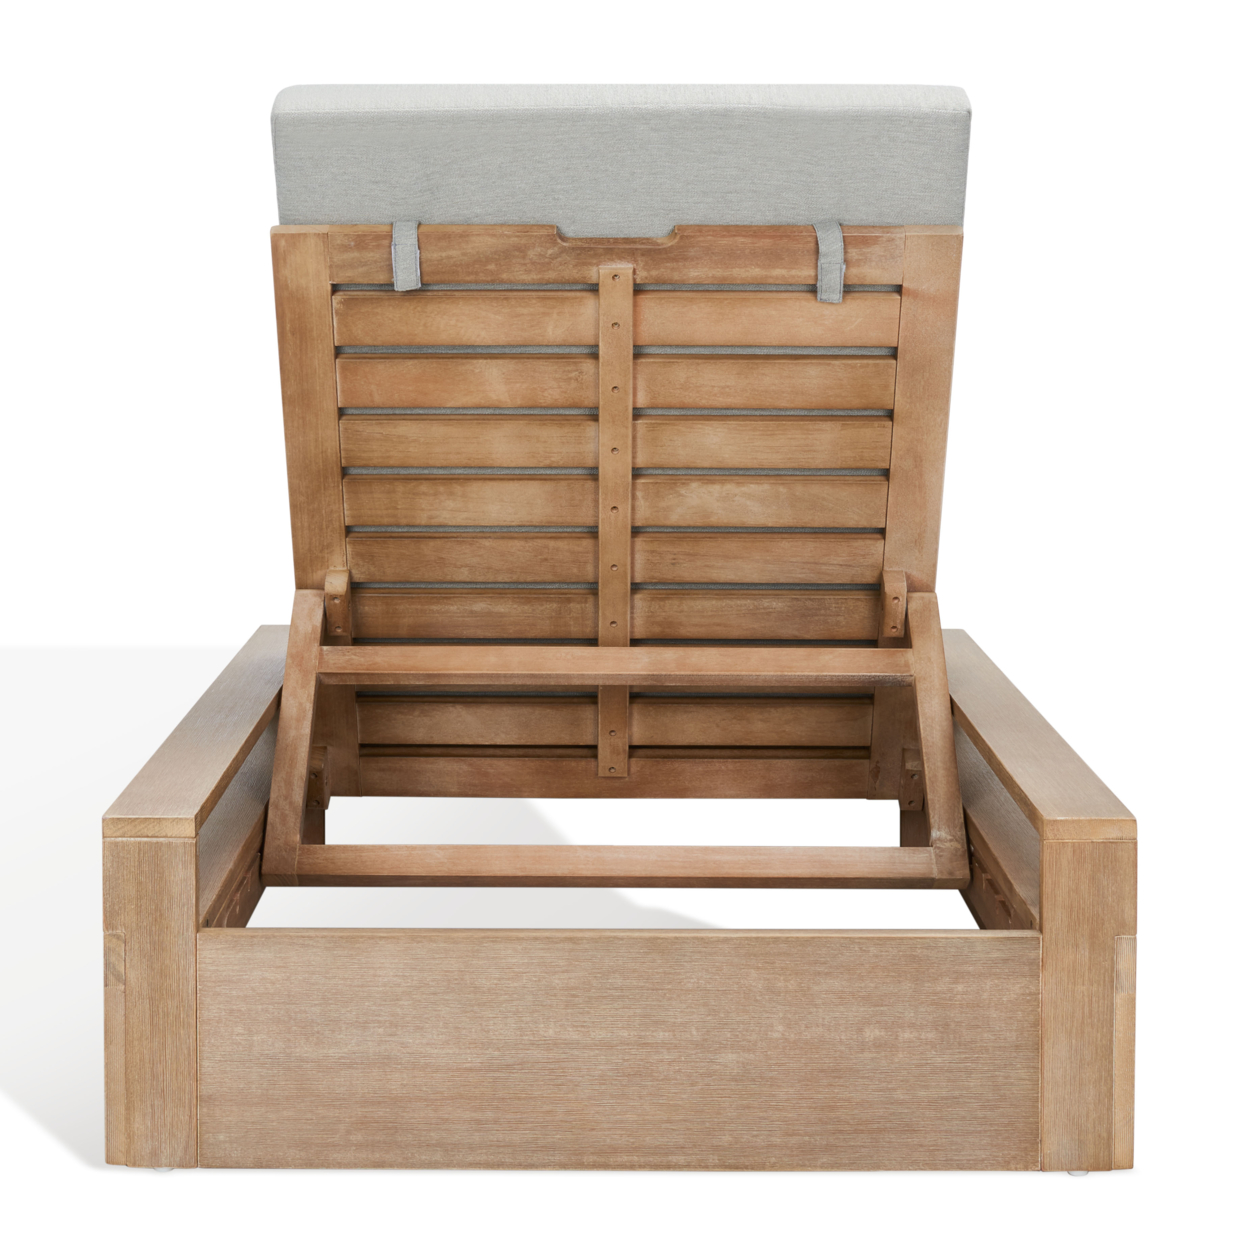 SAFAVIEH OUTDOOR COUTURE Lanai Wood Chaise Lounge Chair Dark Brown / Beige